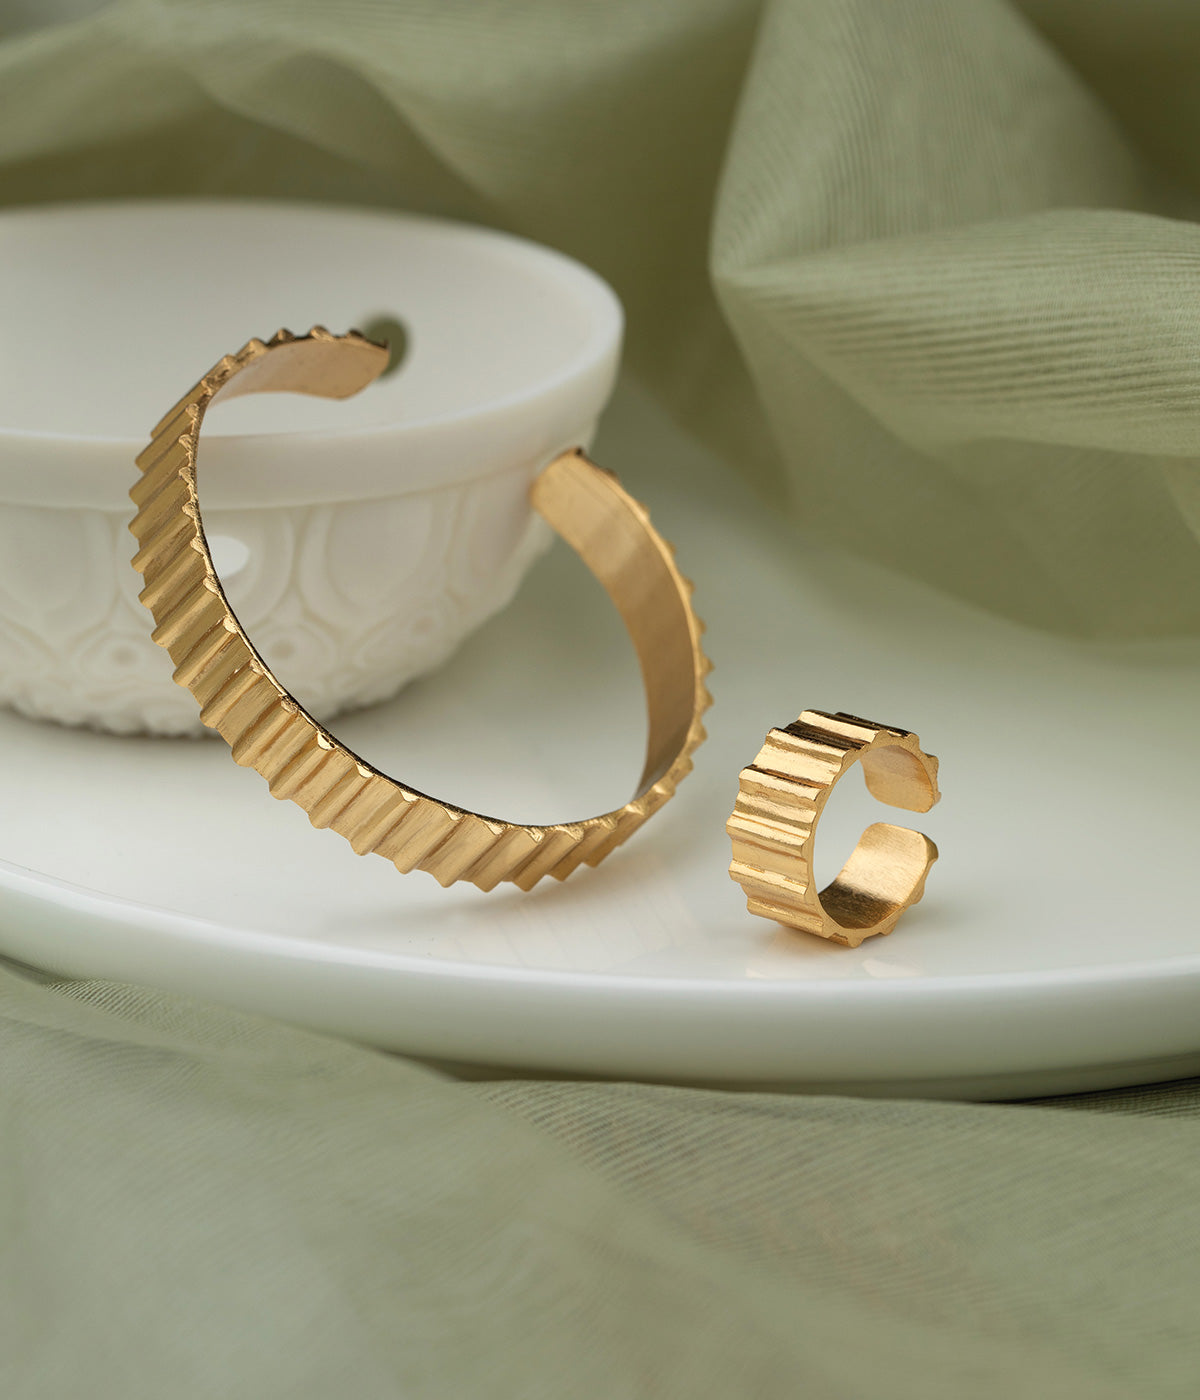 Abru Bracelet Adjustable Stack With Dainty Rings  22k Gold Plated On Brass - ZEWAR Jewelry